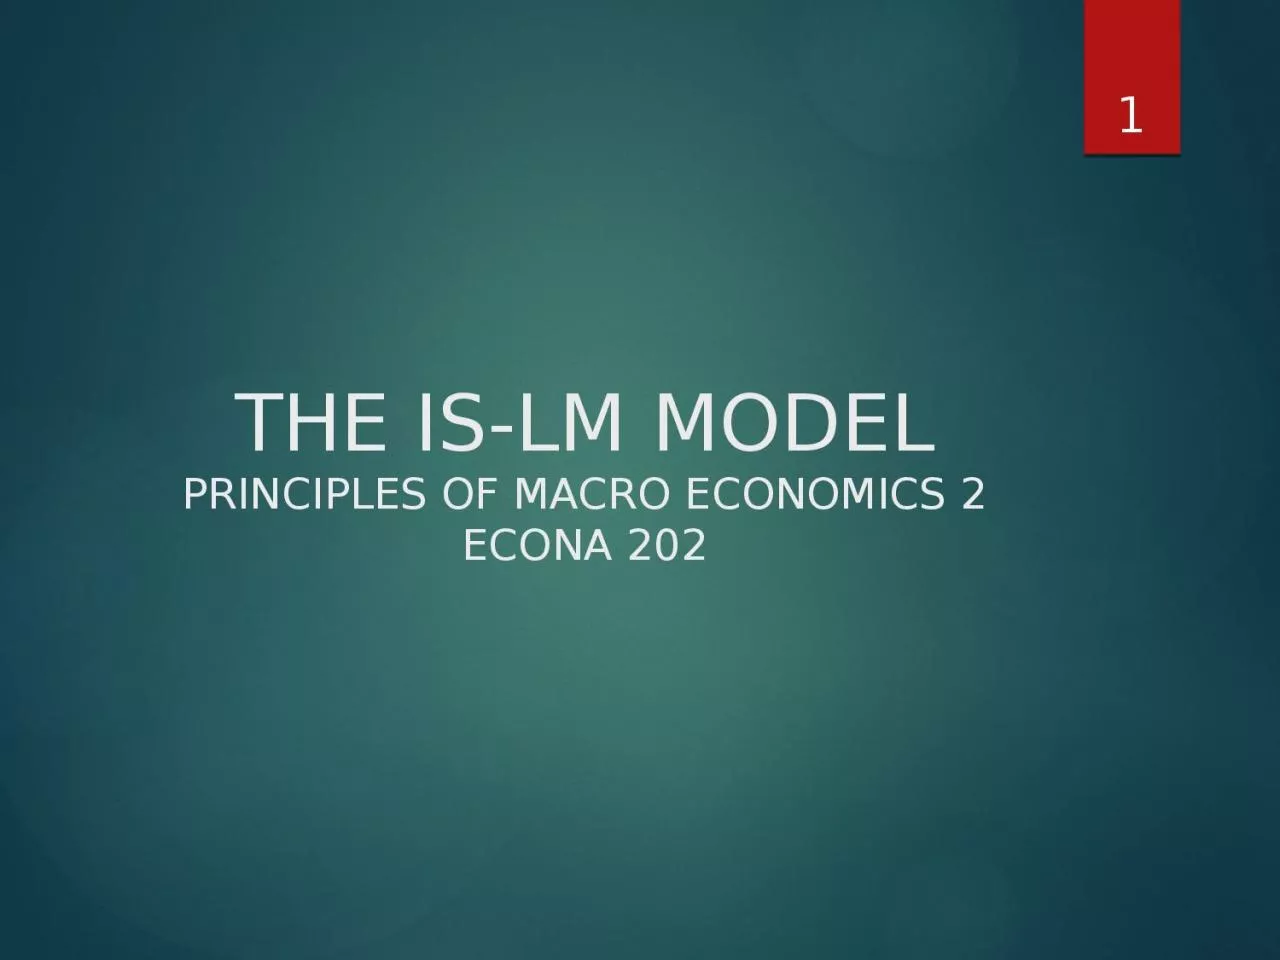 THE IS-LM MODEL PRINCIPLES OF MACRO ECONOMICS 2